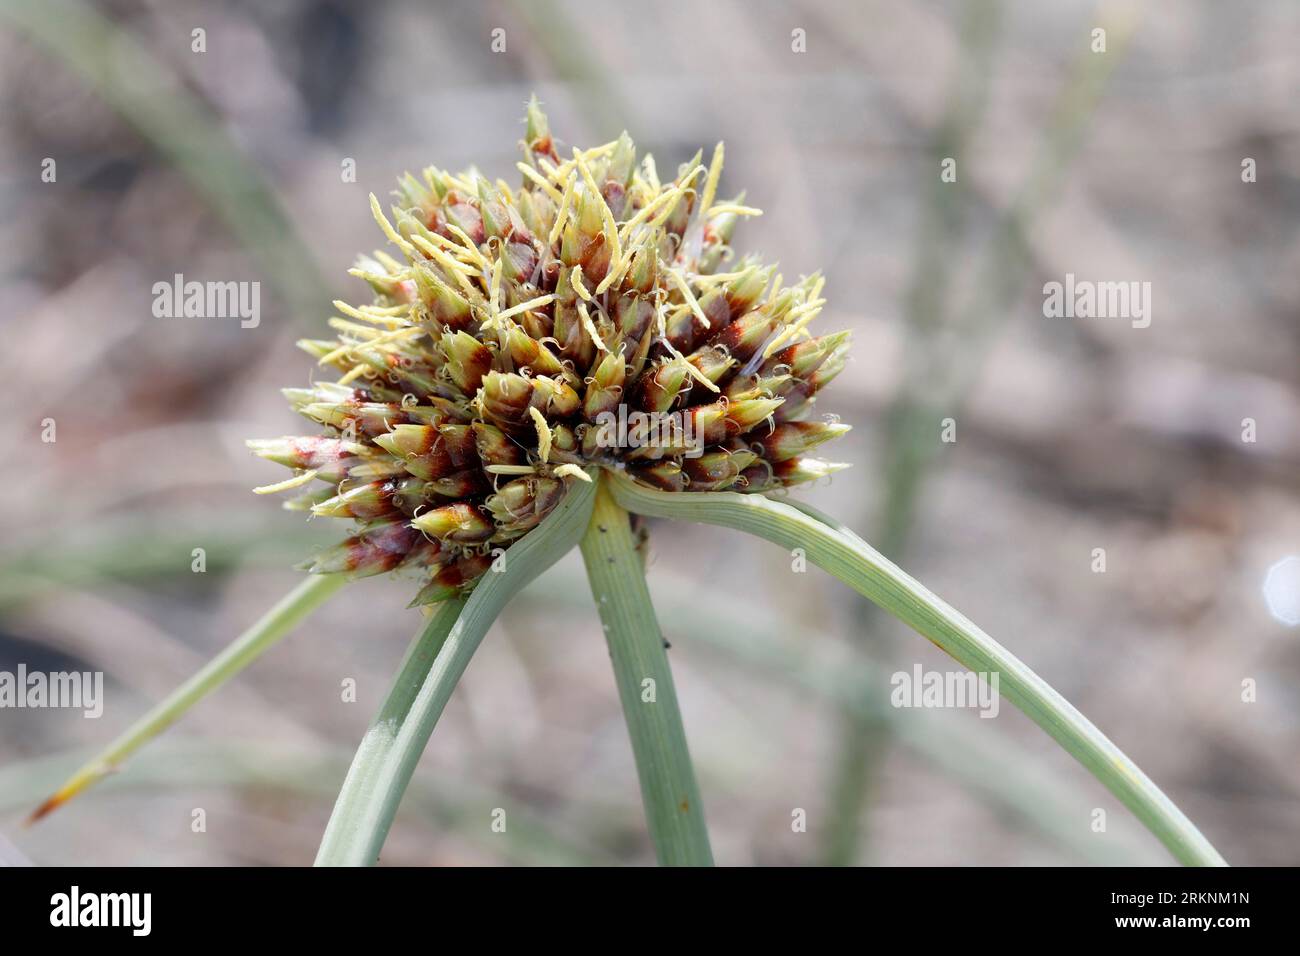 Capitate Galingale, Capitate Nut-grass (Cyperus capitatus, Cyperus maritimus, Chlorocyperus aegyptiacus), blooming on the beach, Croatia Stock Photo